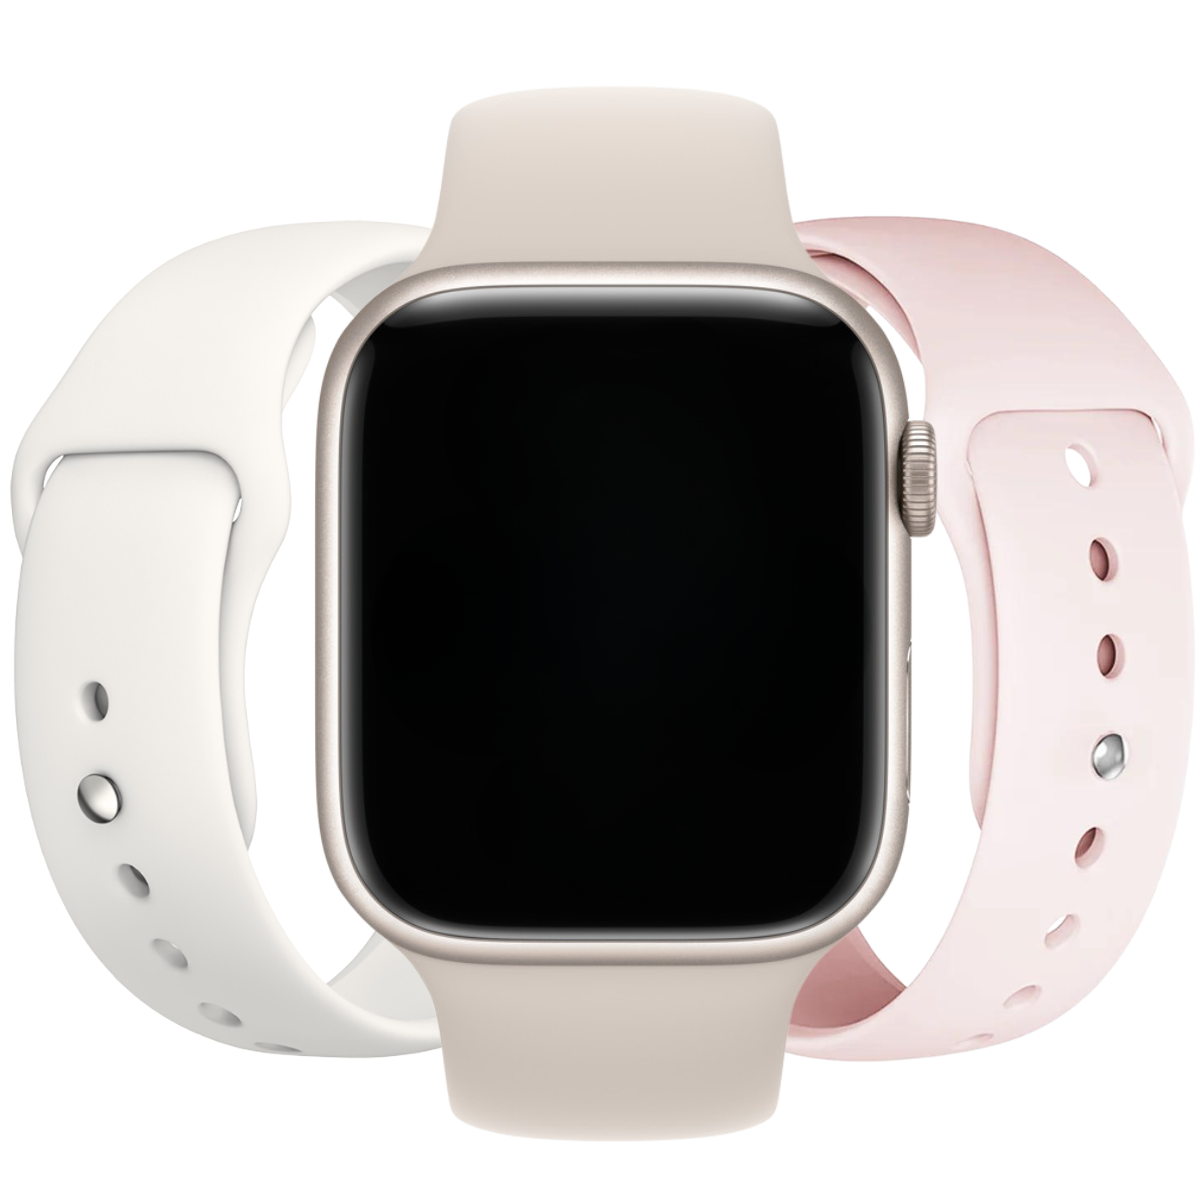 Deportes suaves Apple Watch paquete ventajoso - 3x